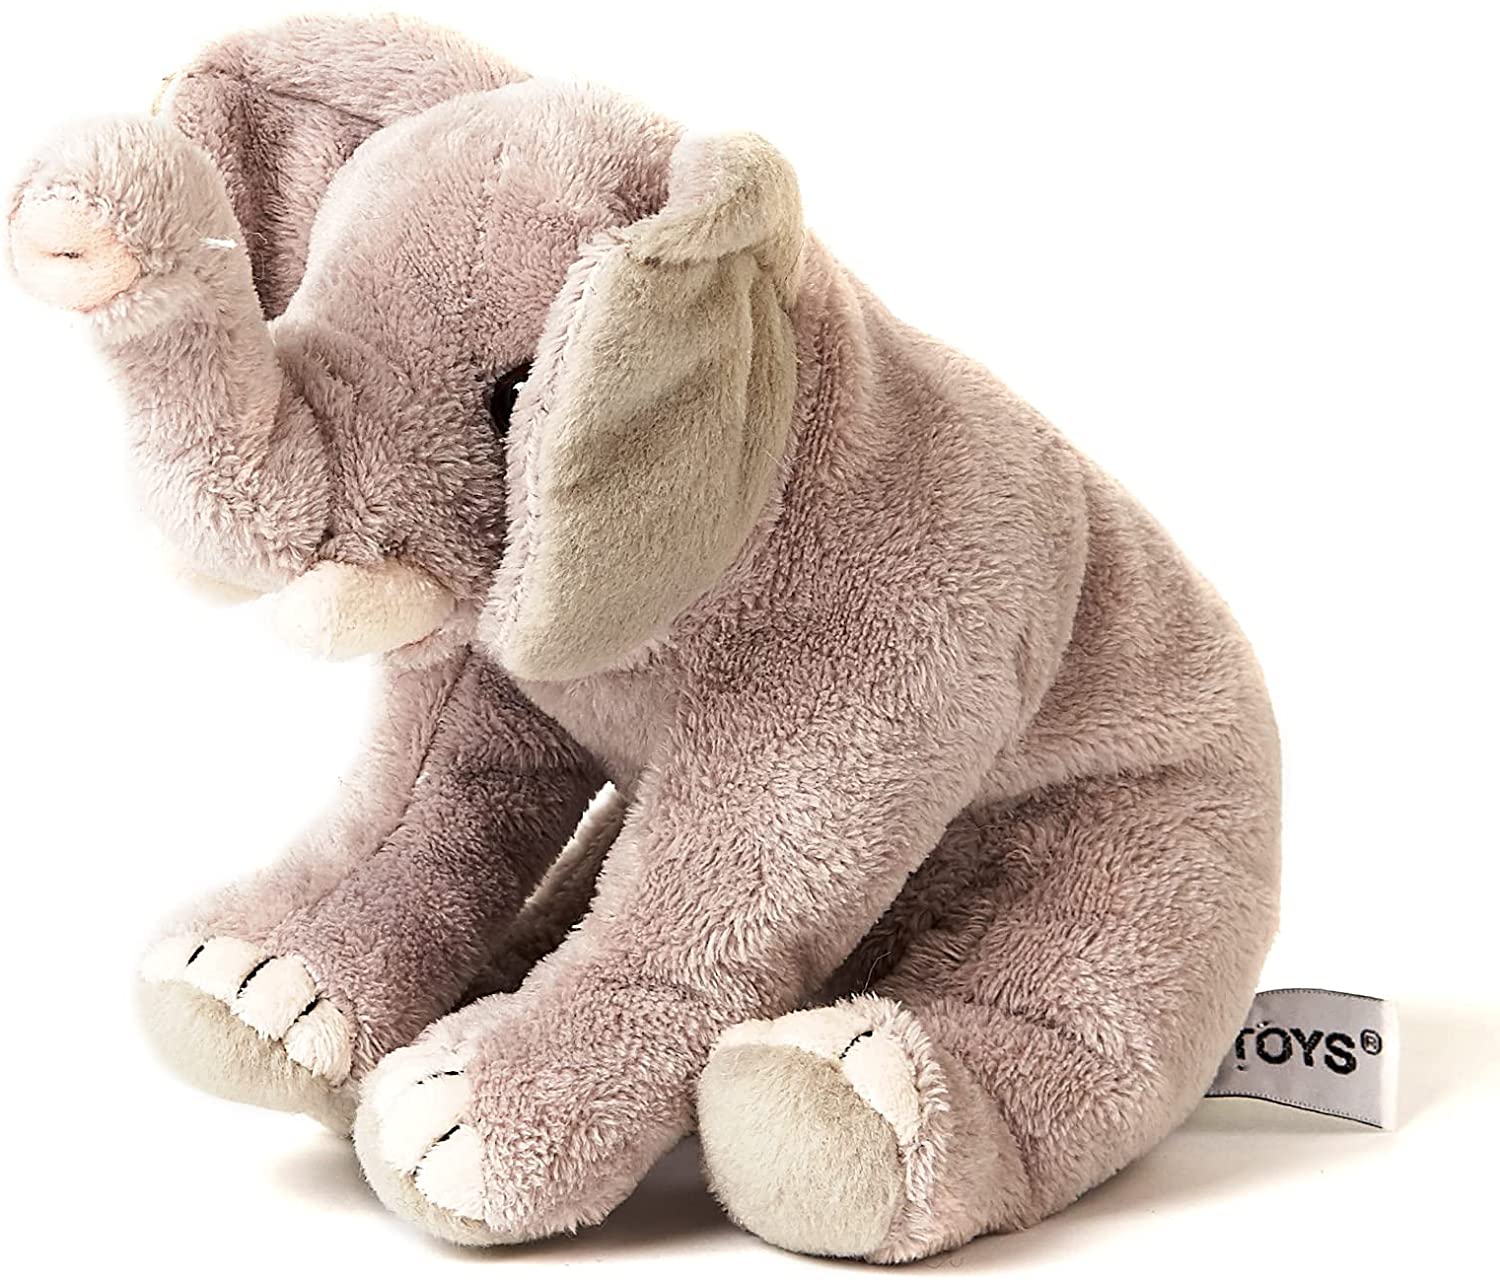 Uni-Toys - Elefant, sitzend - 14 cm (Höhe) - Plüsch-Elefant - Plüschtier, Kuscheltier 